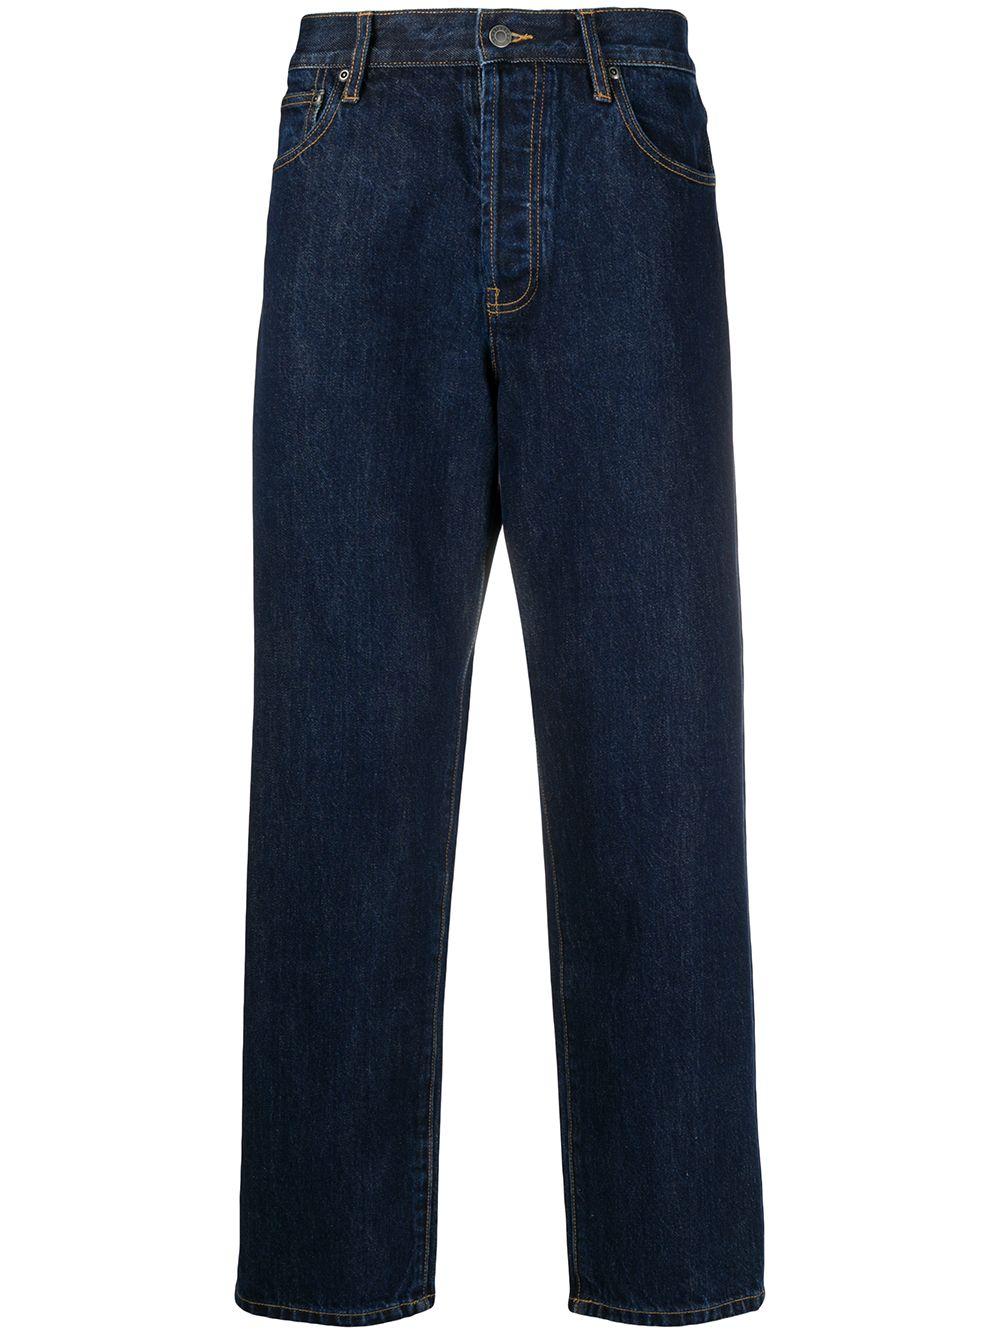 Stussy Denim Wide-leg Jeans in Blue for Men - Lyst